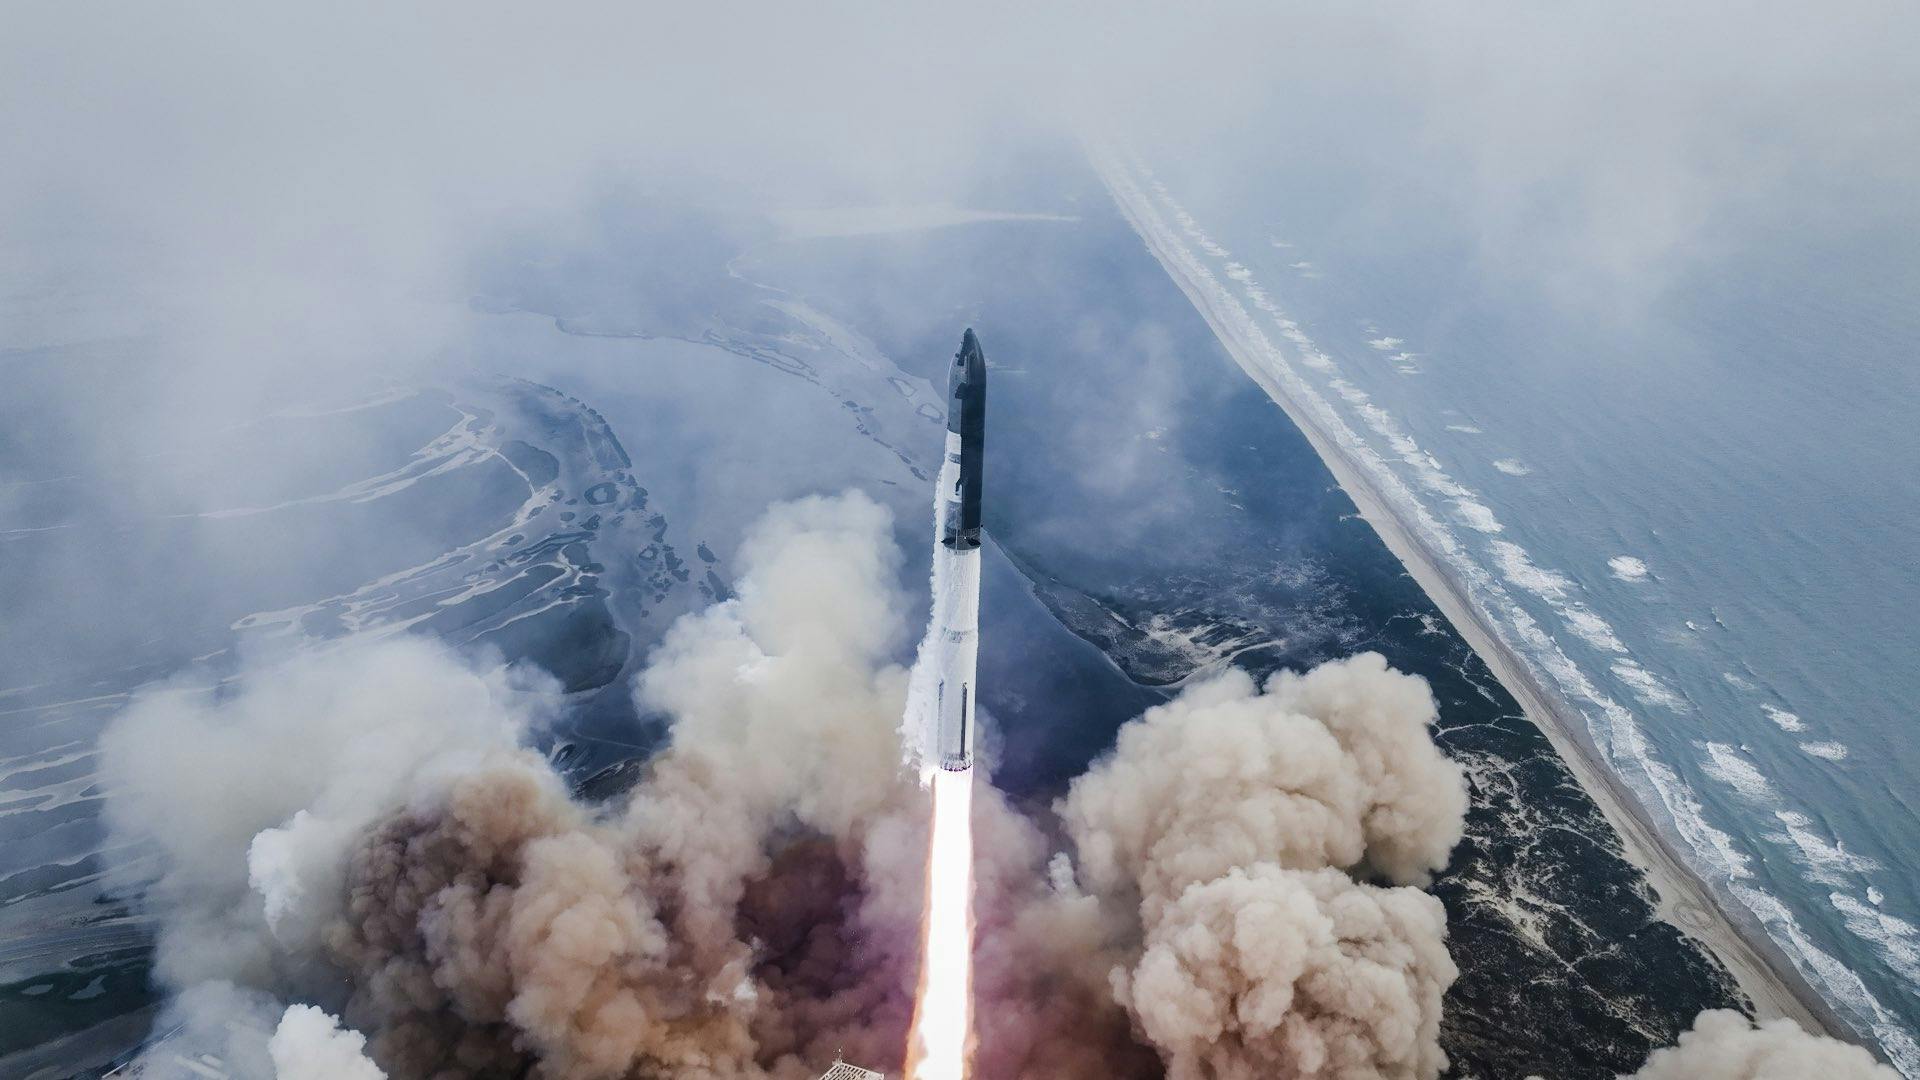 The Starship rocket launching on its third test flight